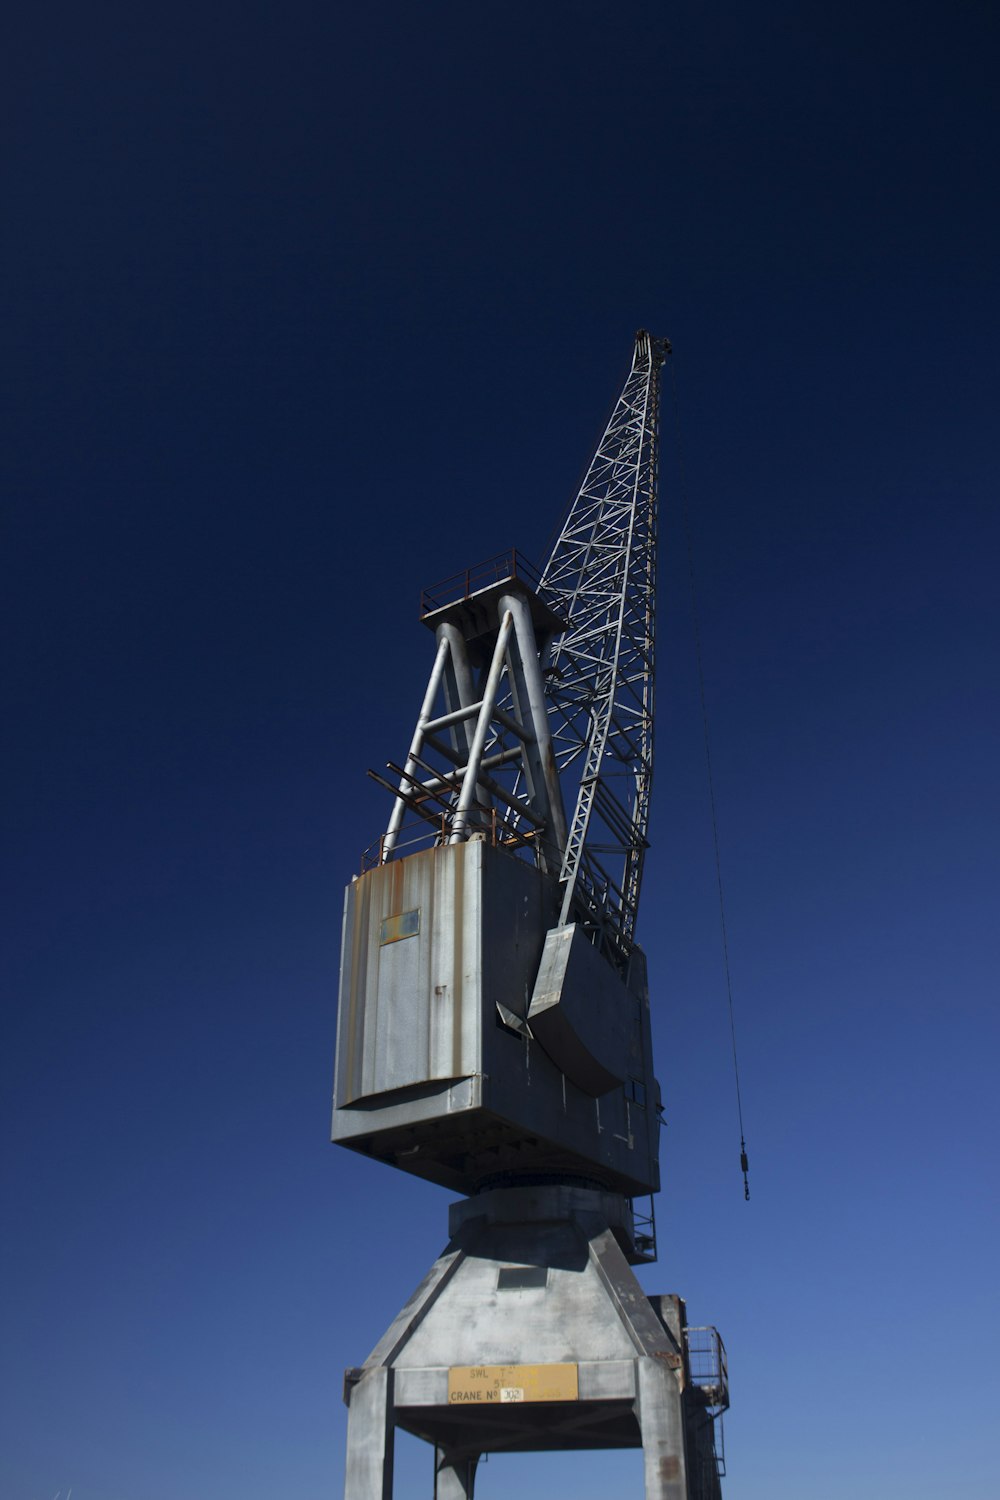 gray metal crane equipment under blue sky